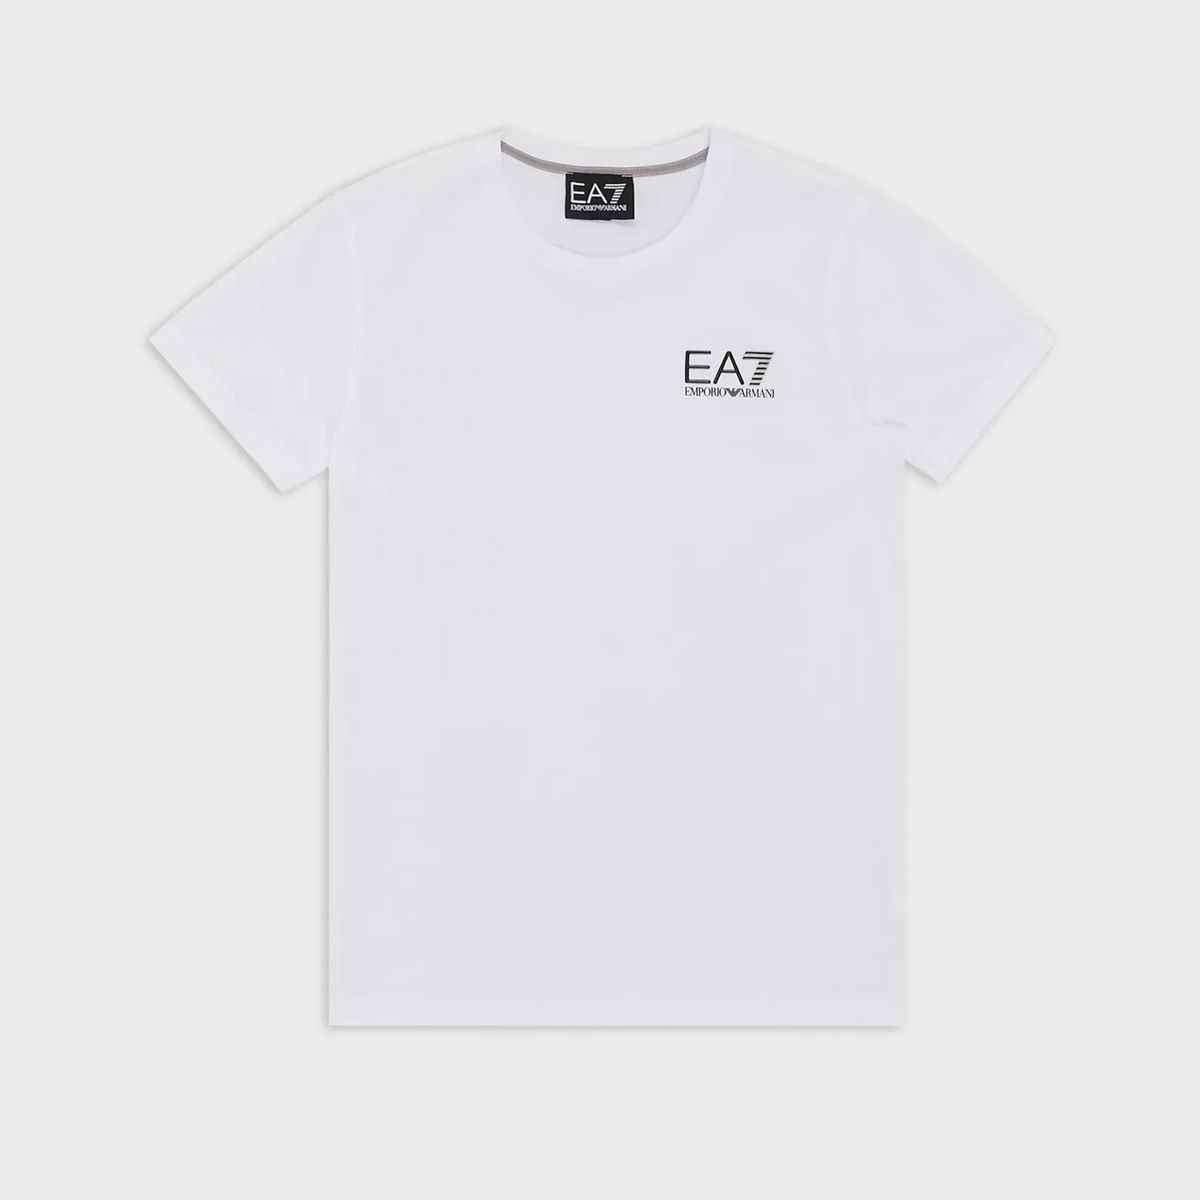 EA7 K T-Shirt - EMPORIO ARMANI